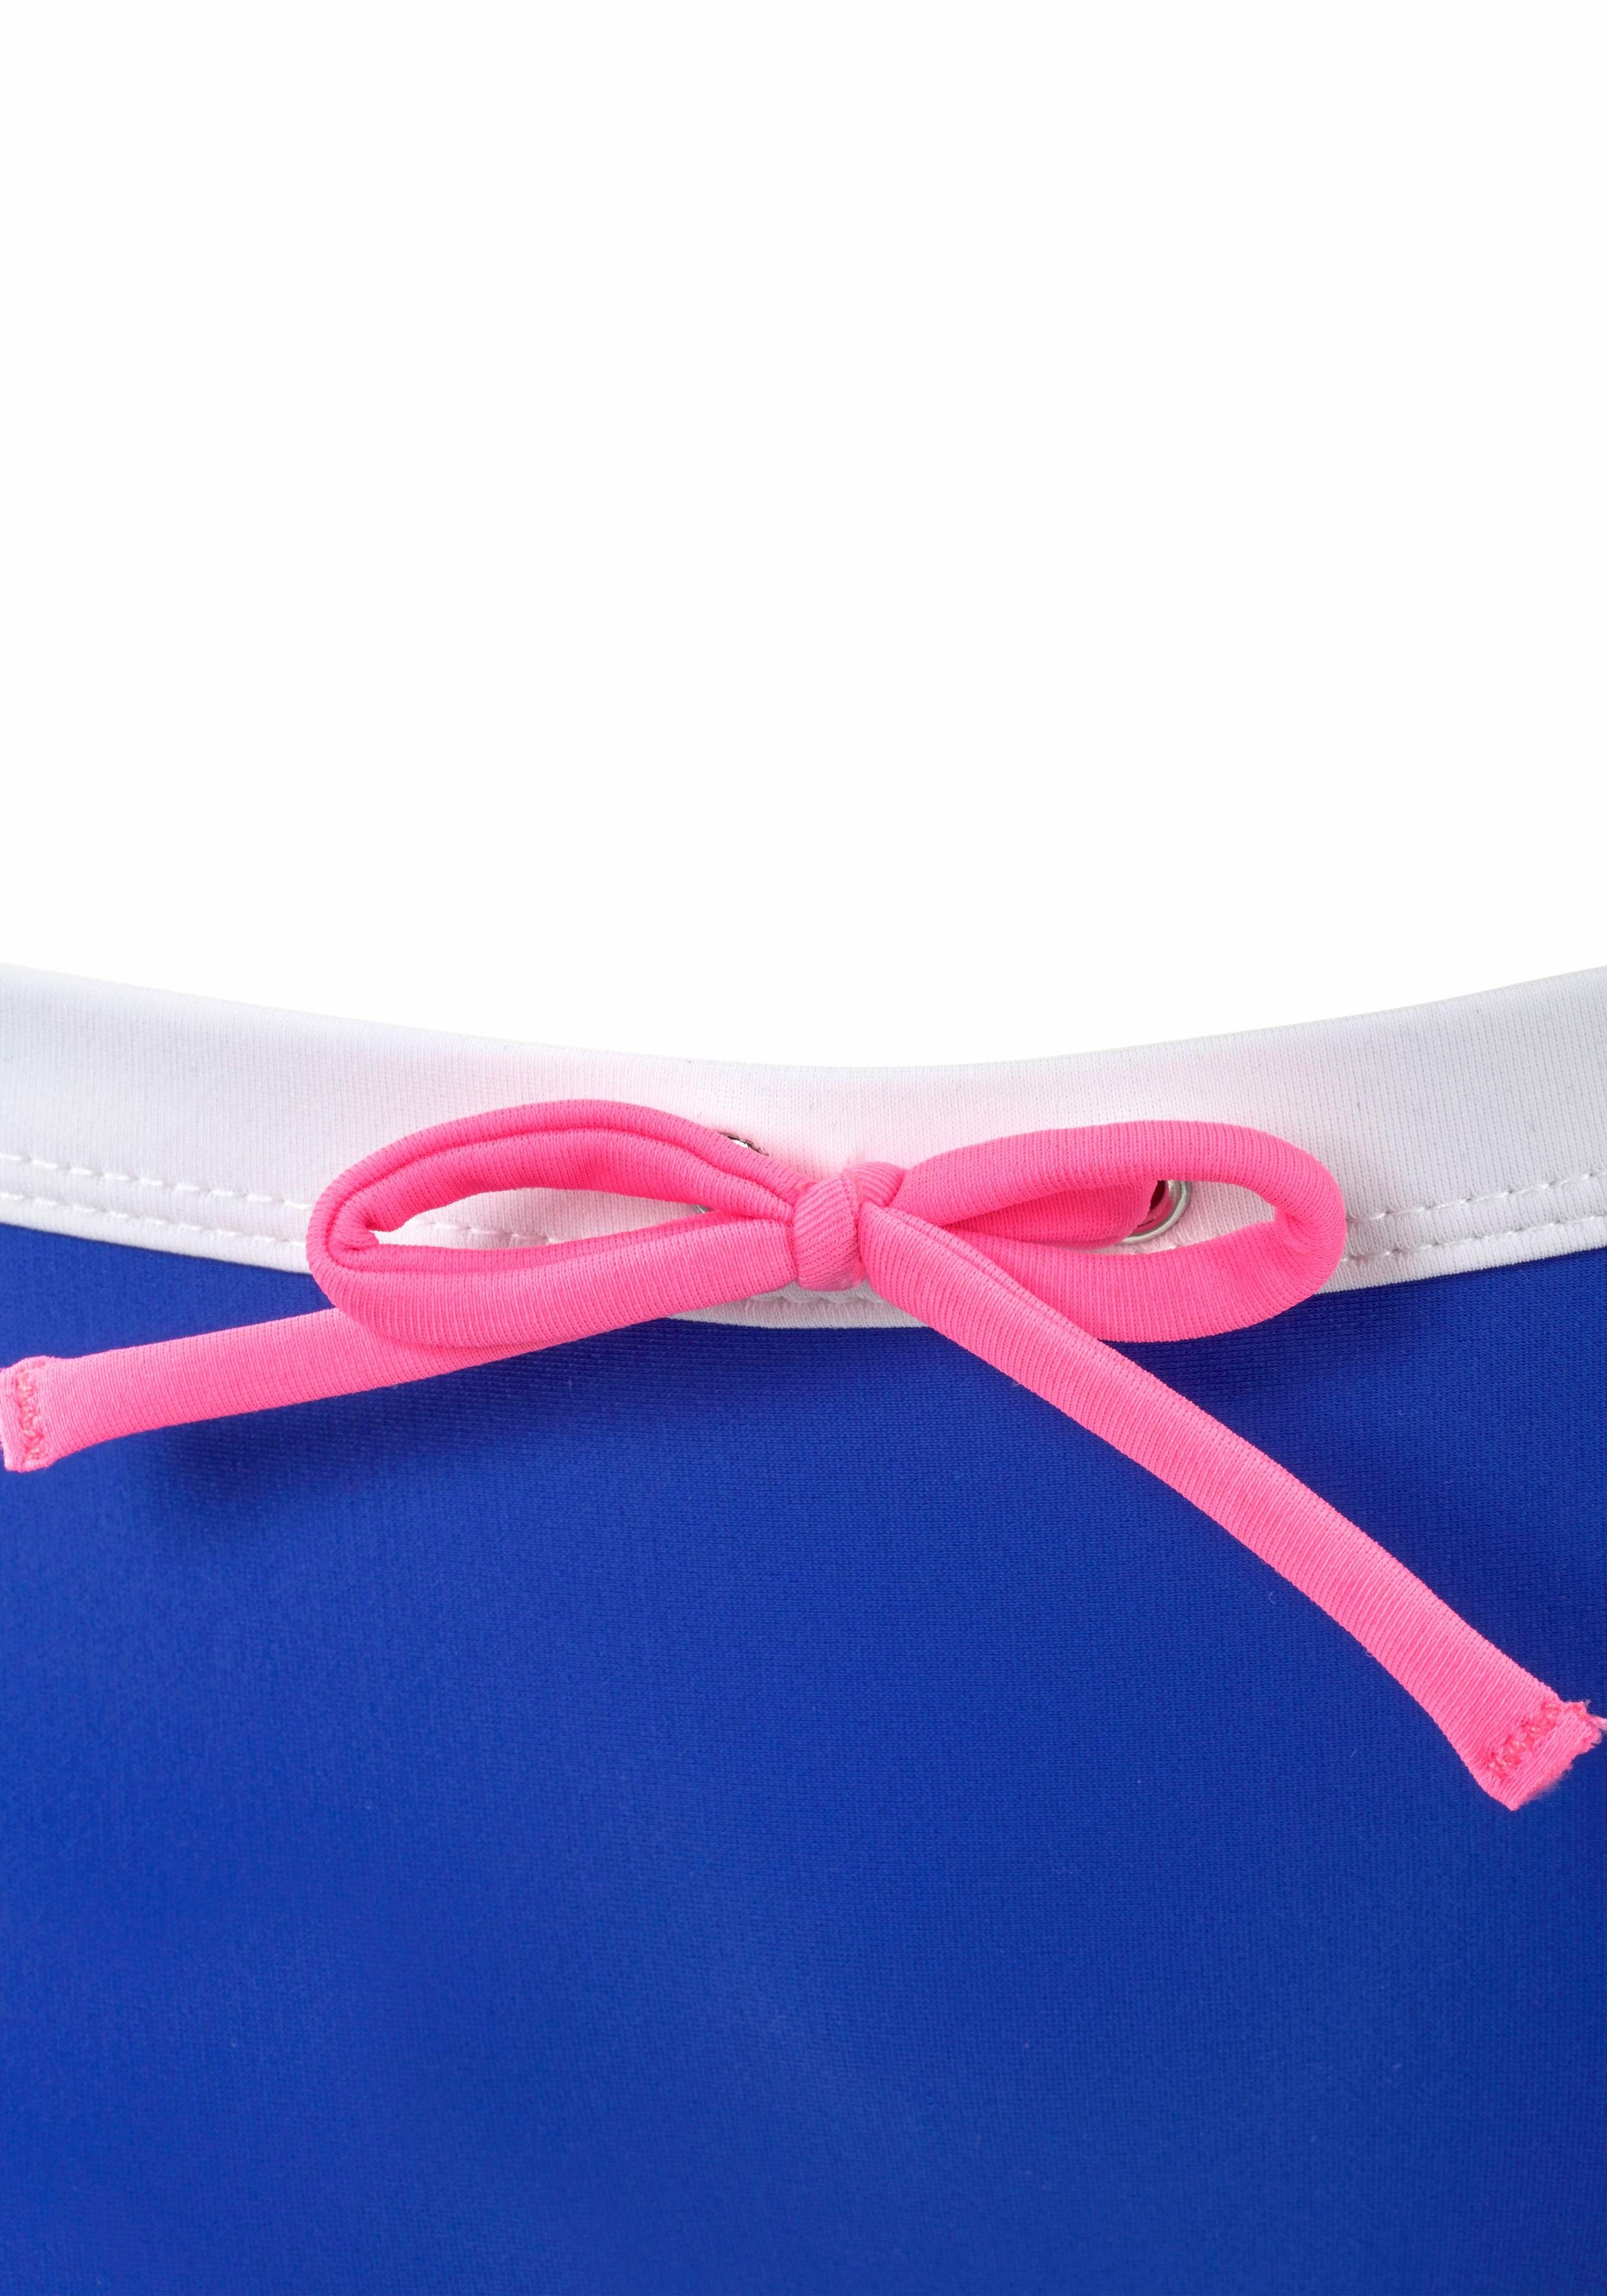 Bench. Bustier-Bikini Kontrastdetails blau-pink mit